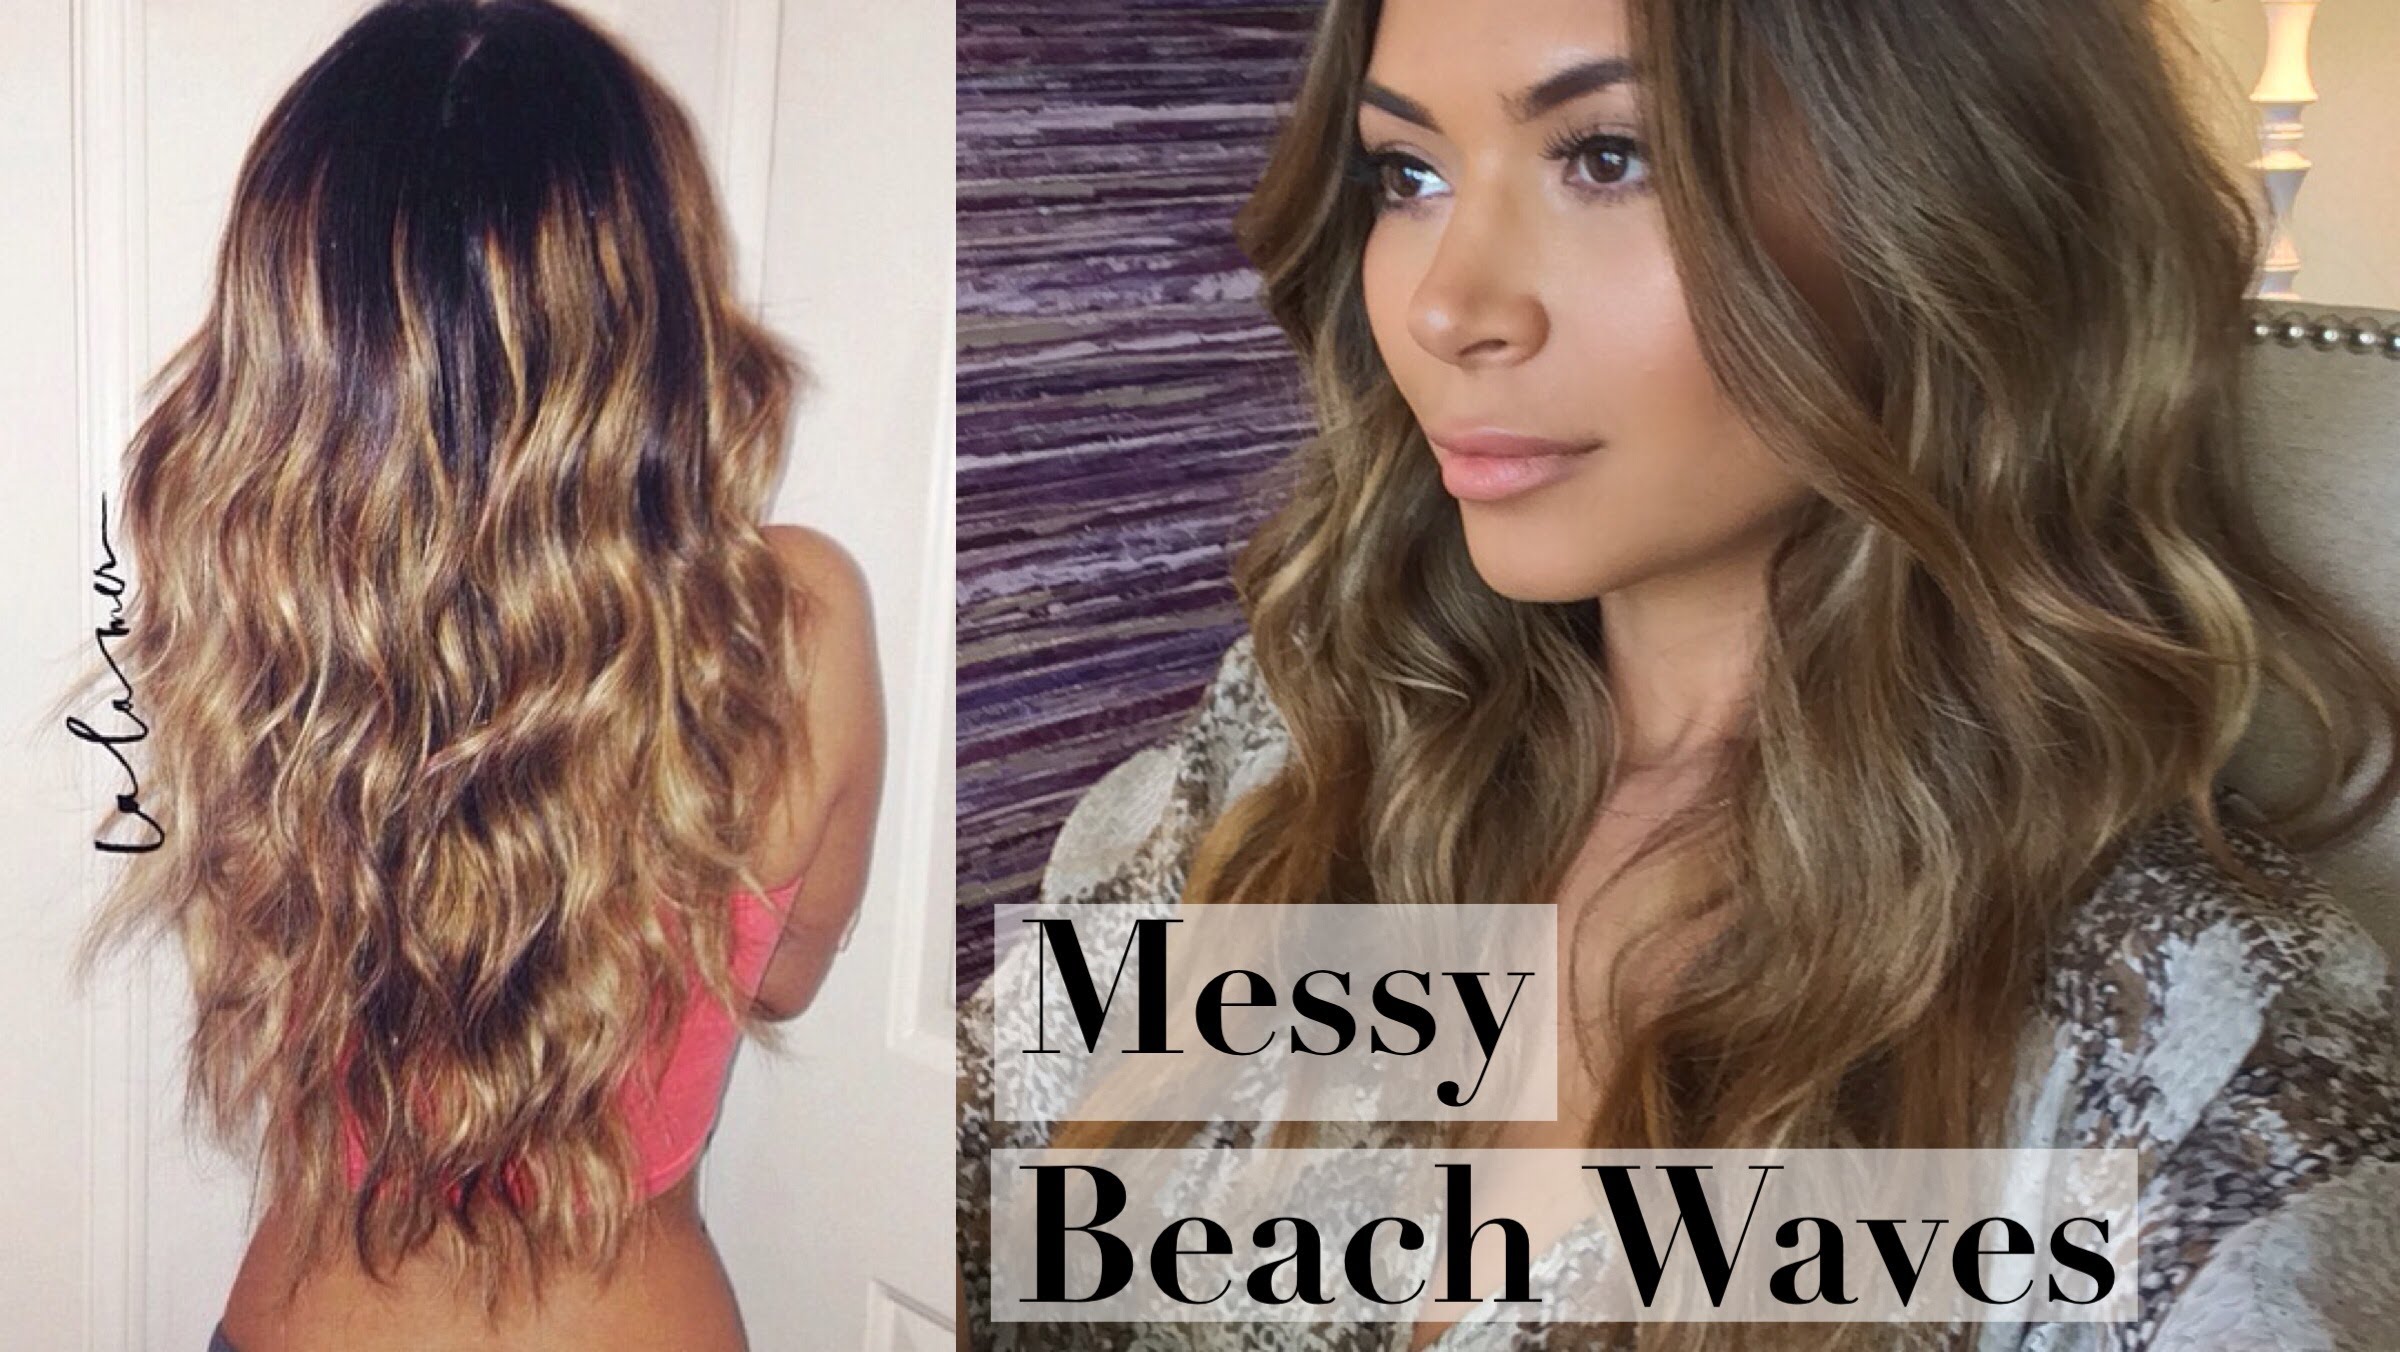 Messy Beach Waves Curls Hair Tutorial - YouTube